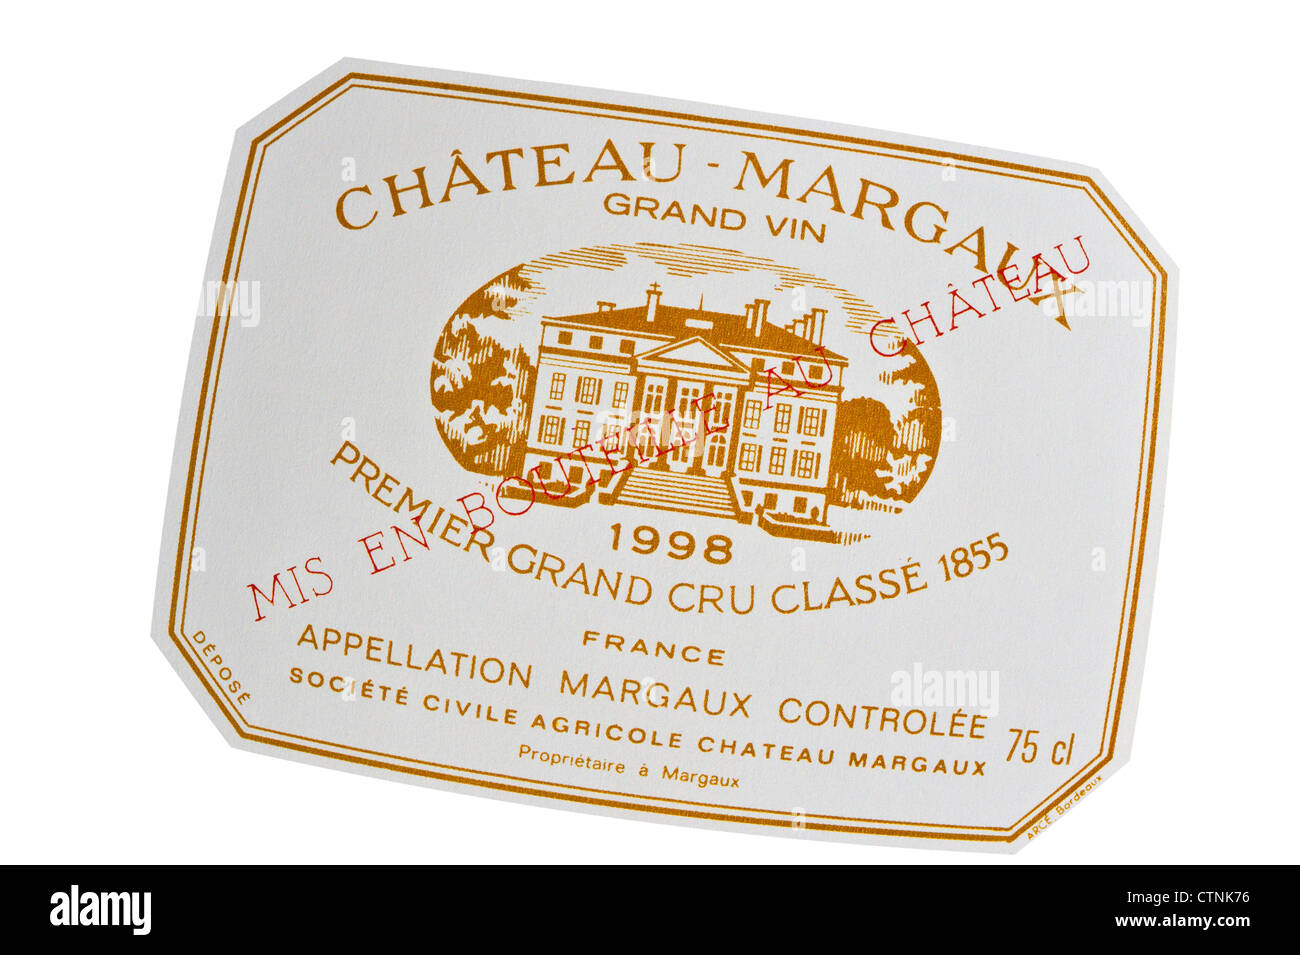 Etiqueta de una botella de vino Chateau Margaux premier grand cru classe 1998 vino rojo Burdeos gironda Francia Foto de stock